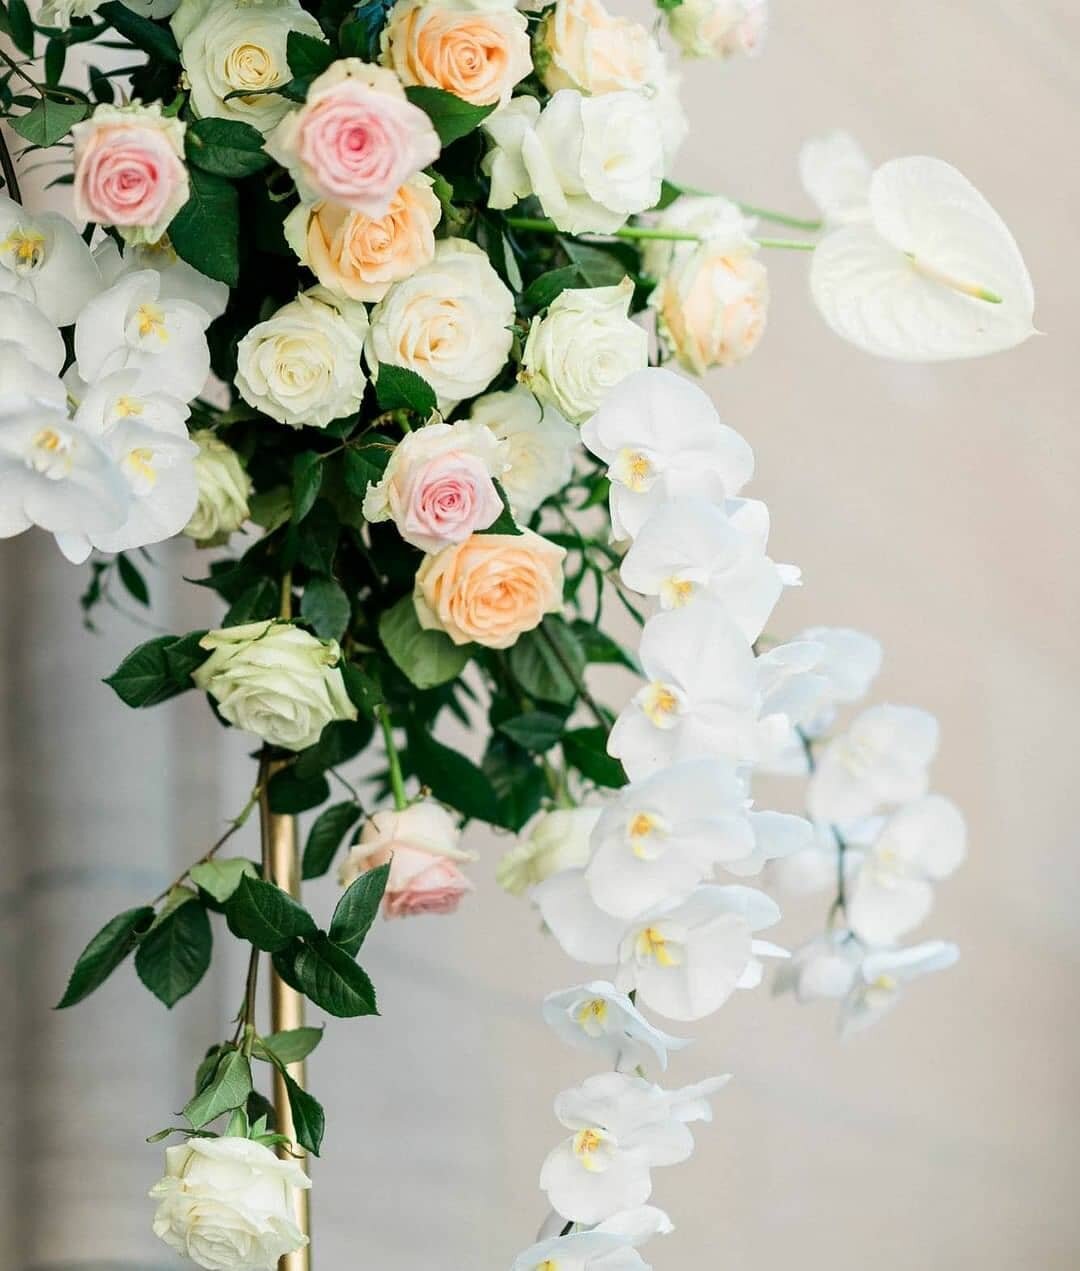 . BEAU RIVAGE WEDDING .

#Repost @loic.seiko
&bull; &bull; &bull; &bull; &bull; &bull;

#geneve #weddingflowers #weddingday #genevawedding #flowerislove #flowers #weddingphoto #loicseiko #weddingdecoration #loveintheflowers #swisswedding #swissweddin